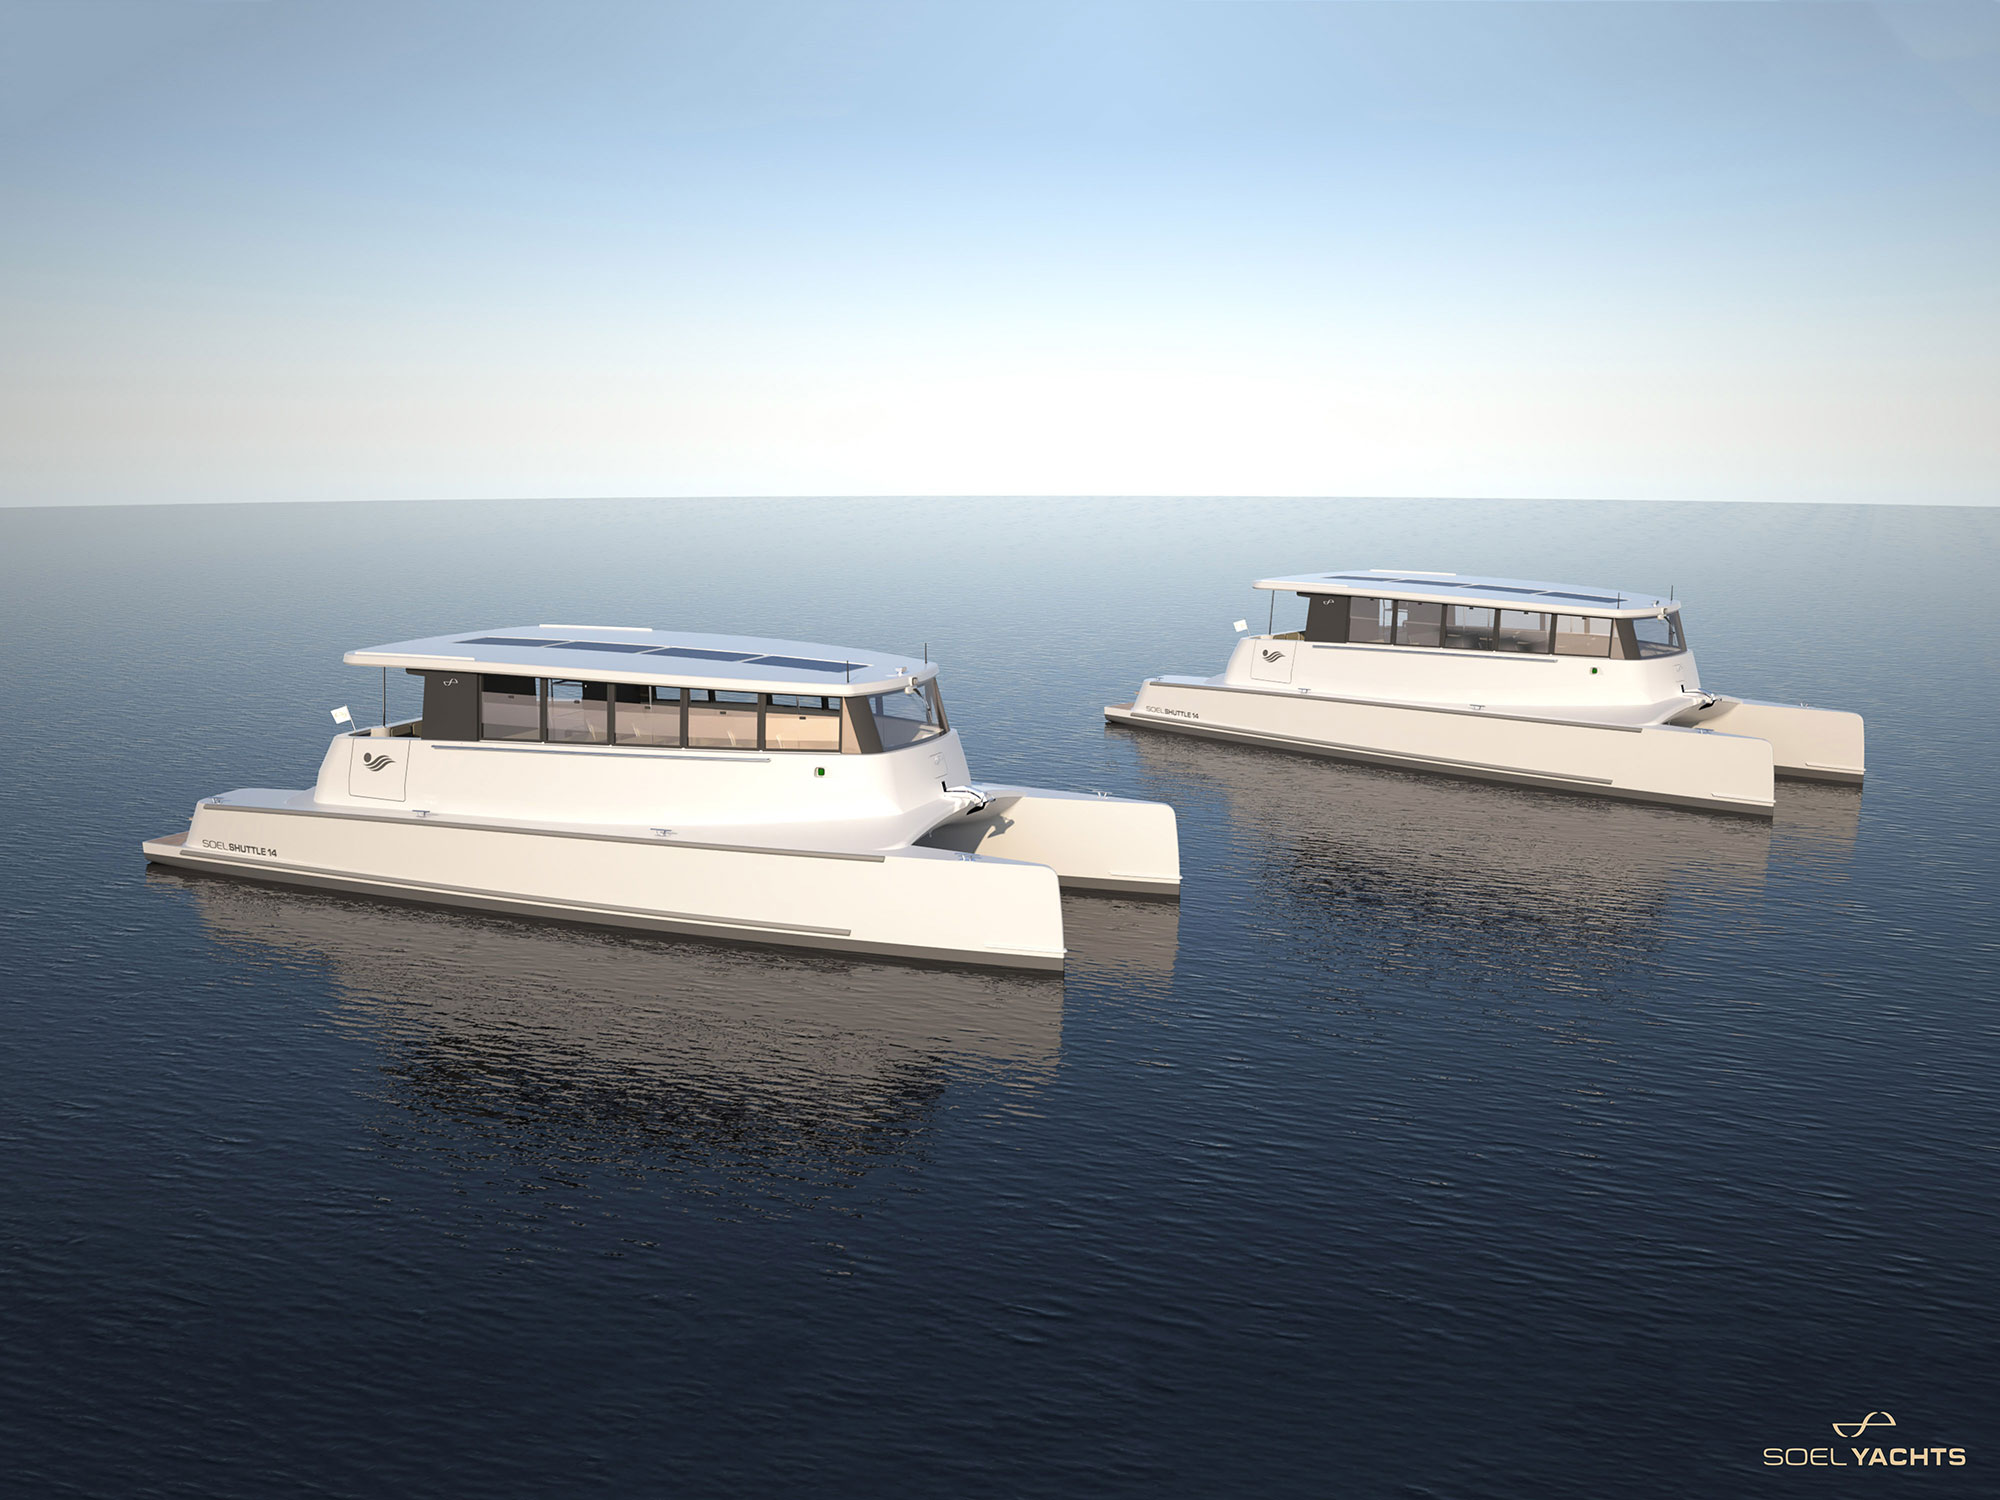 Soel Yachts - solar electric boats-8 - boat shopping